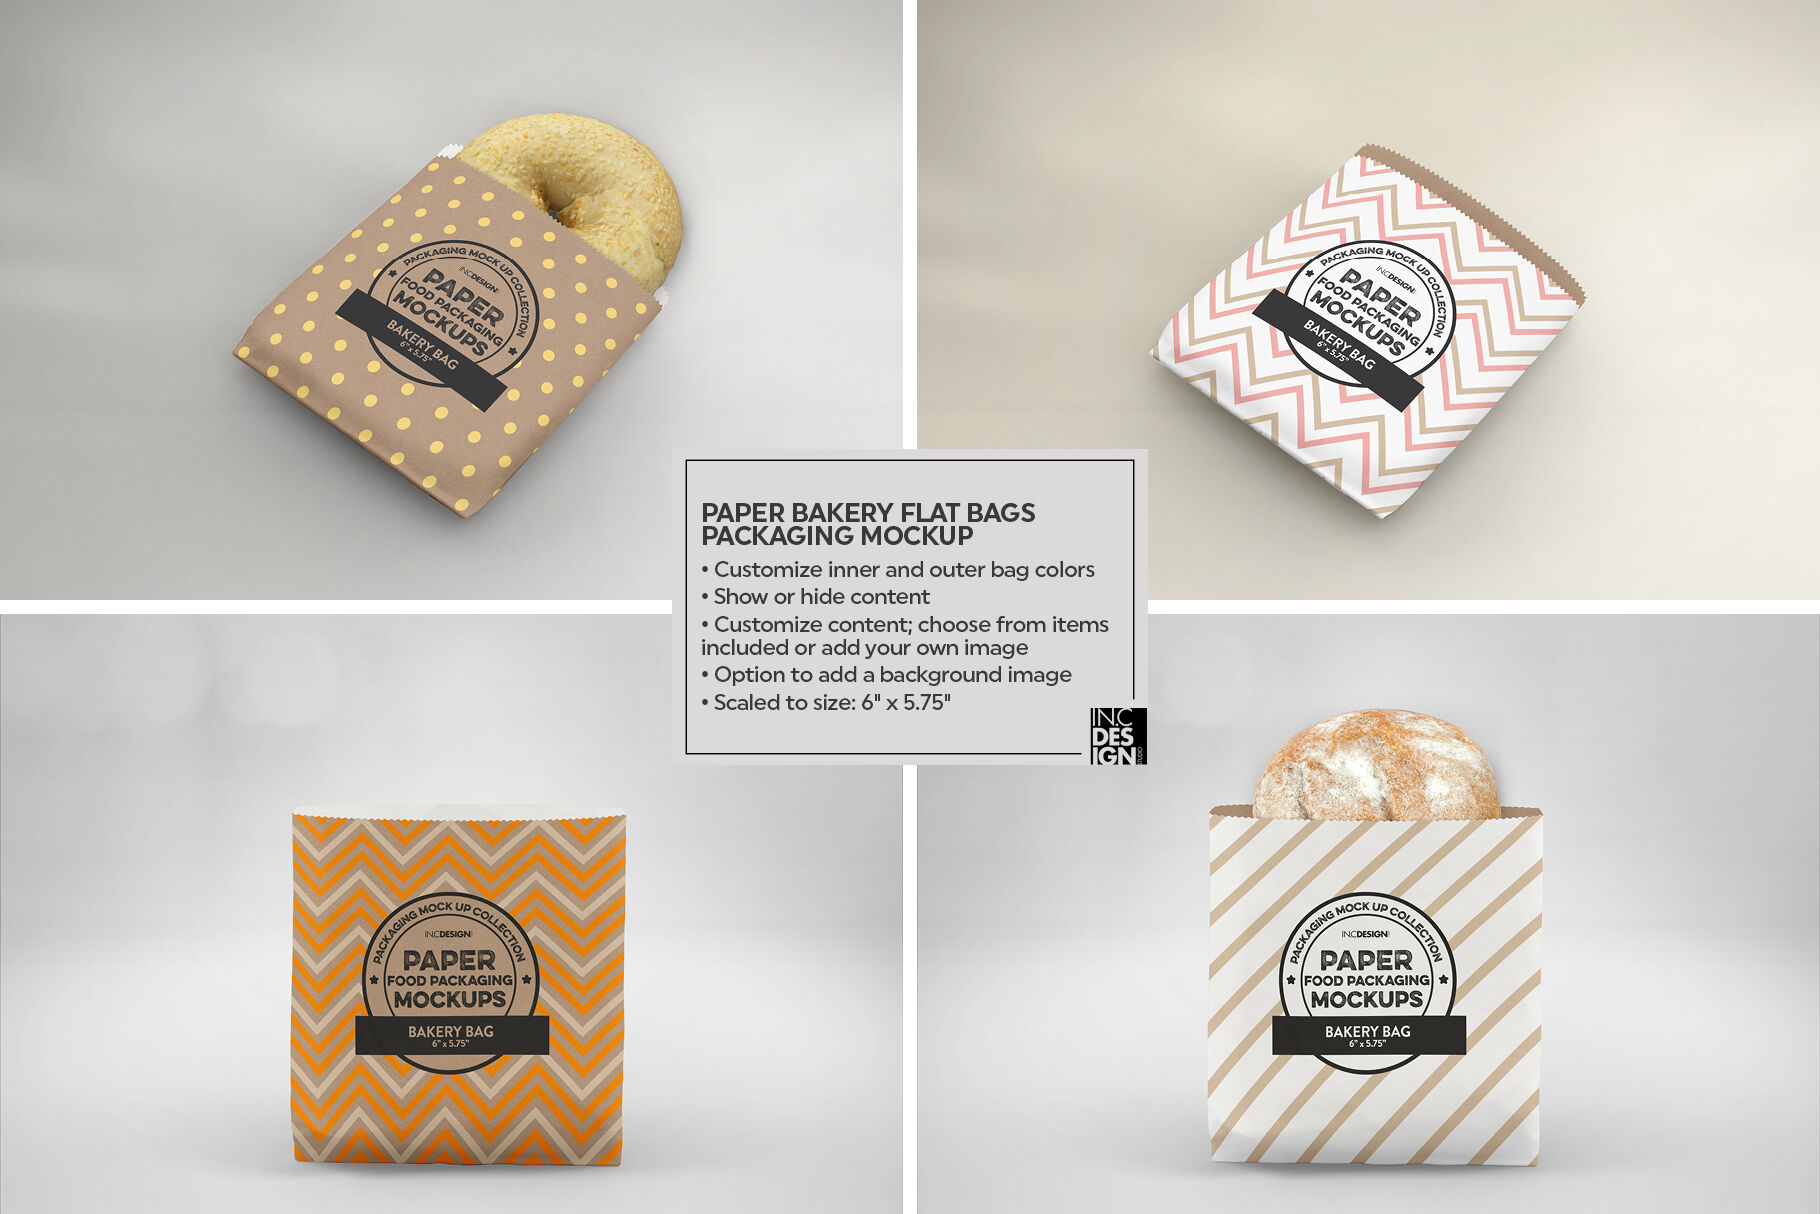 Flat Bakery Bags Packaging Mockup By Inc Design Studio Thehungryjpeg Com